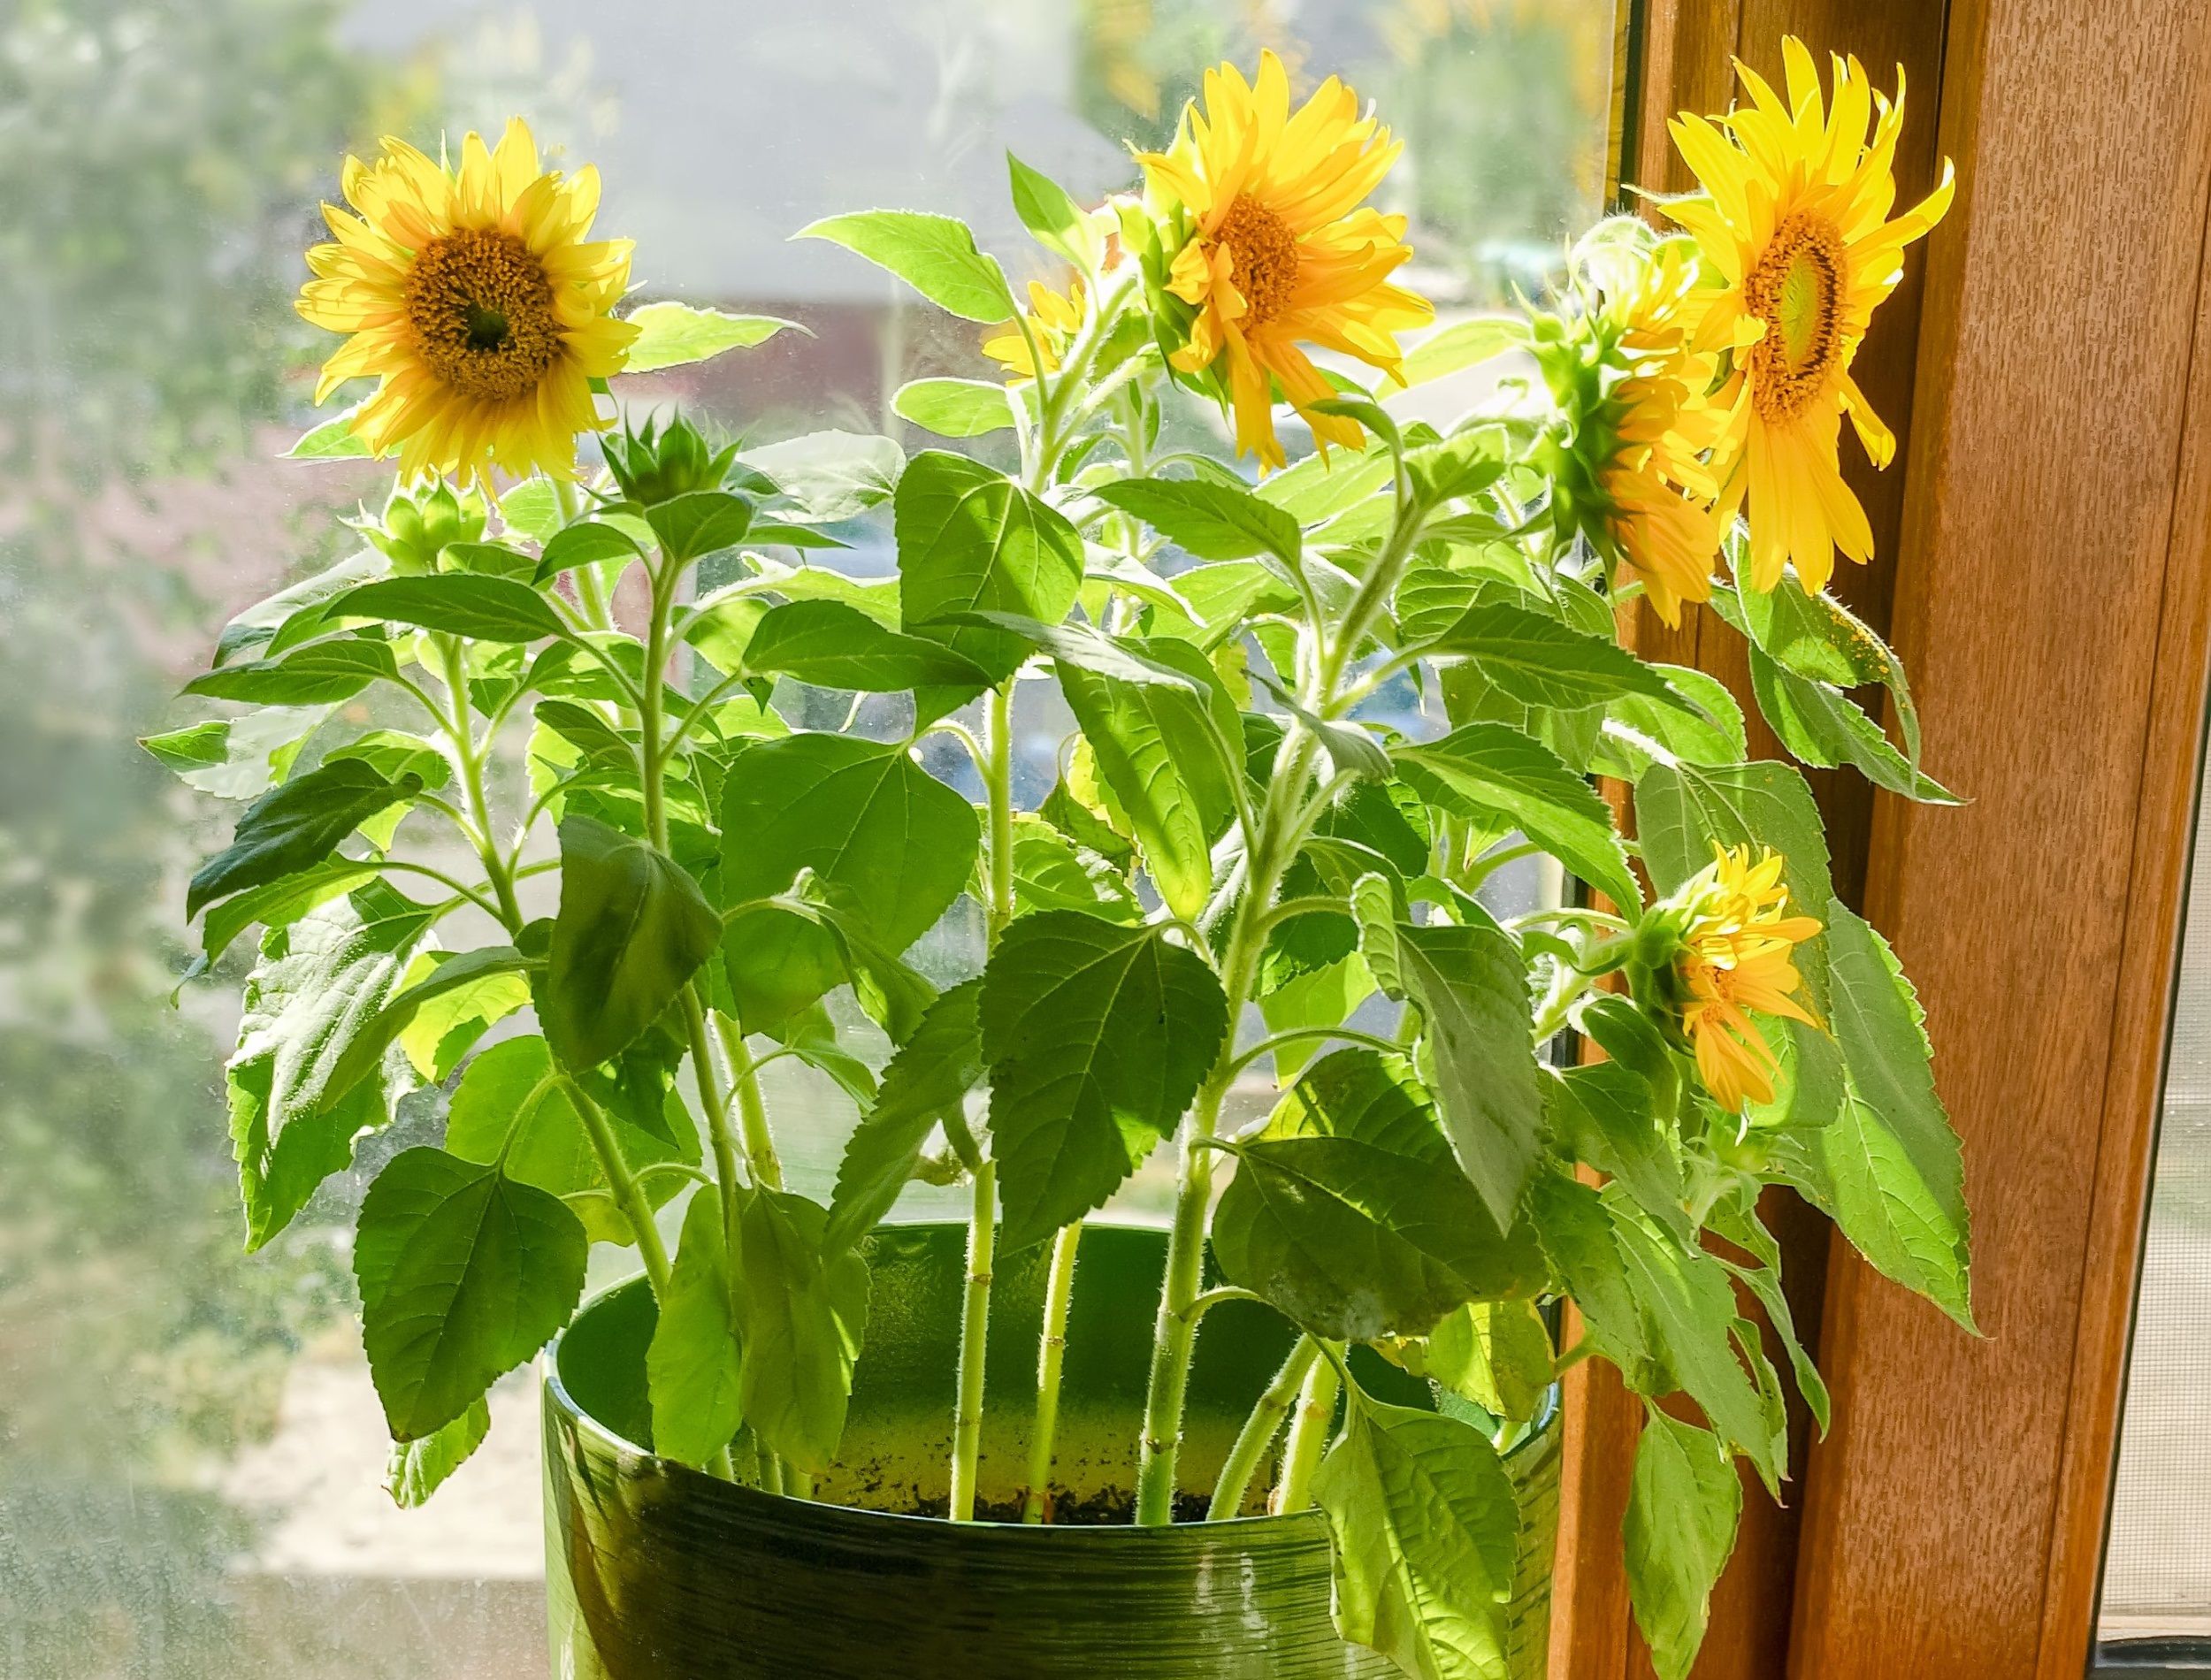 Decorative sunflowers growing in a dreen flower pot on a wooden window sill